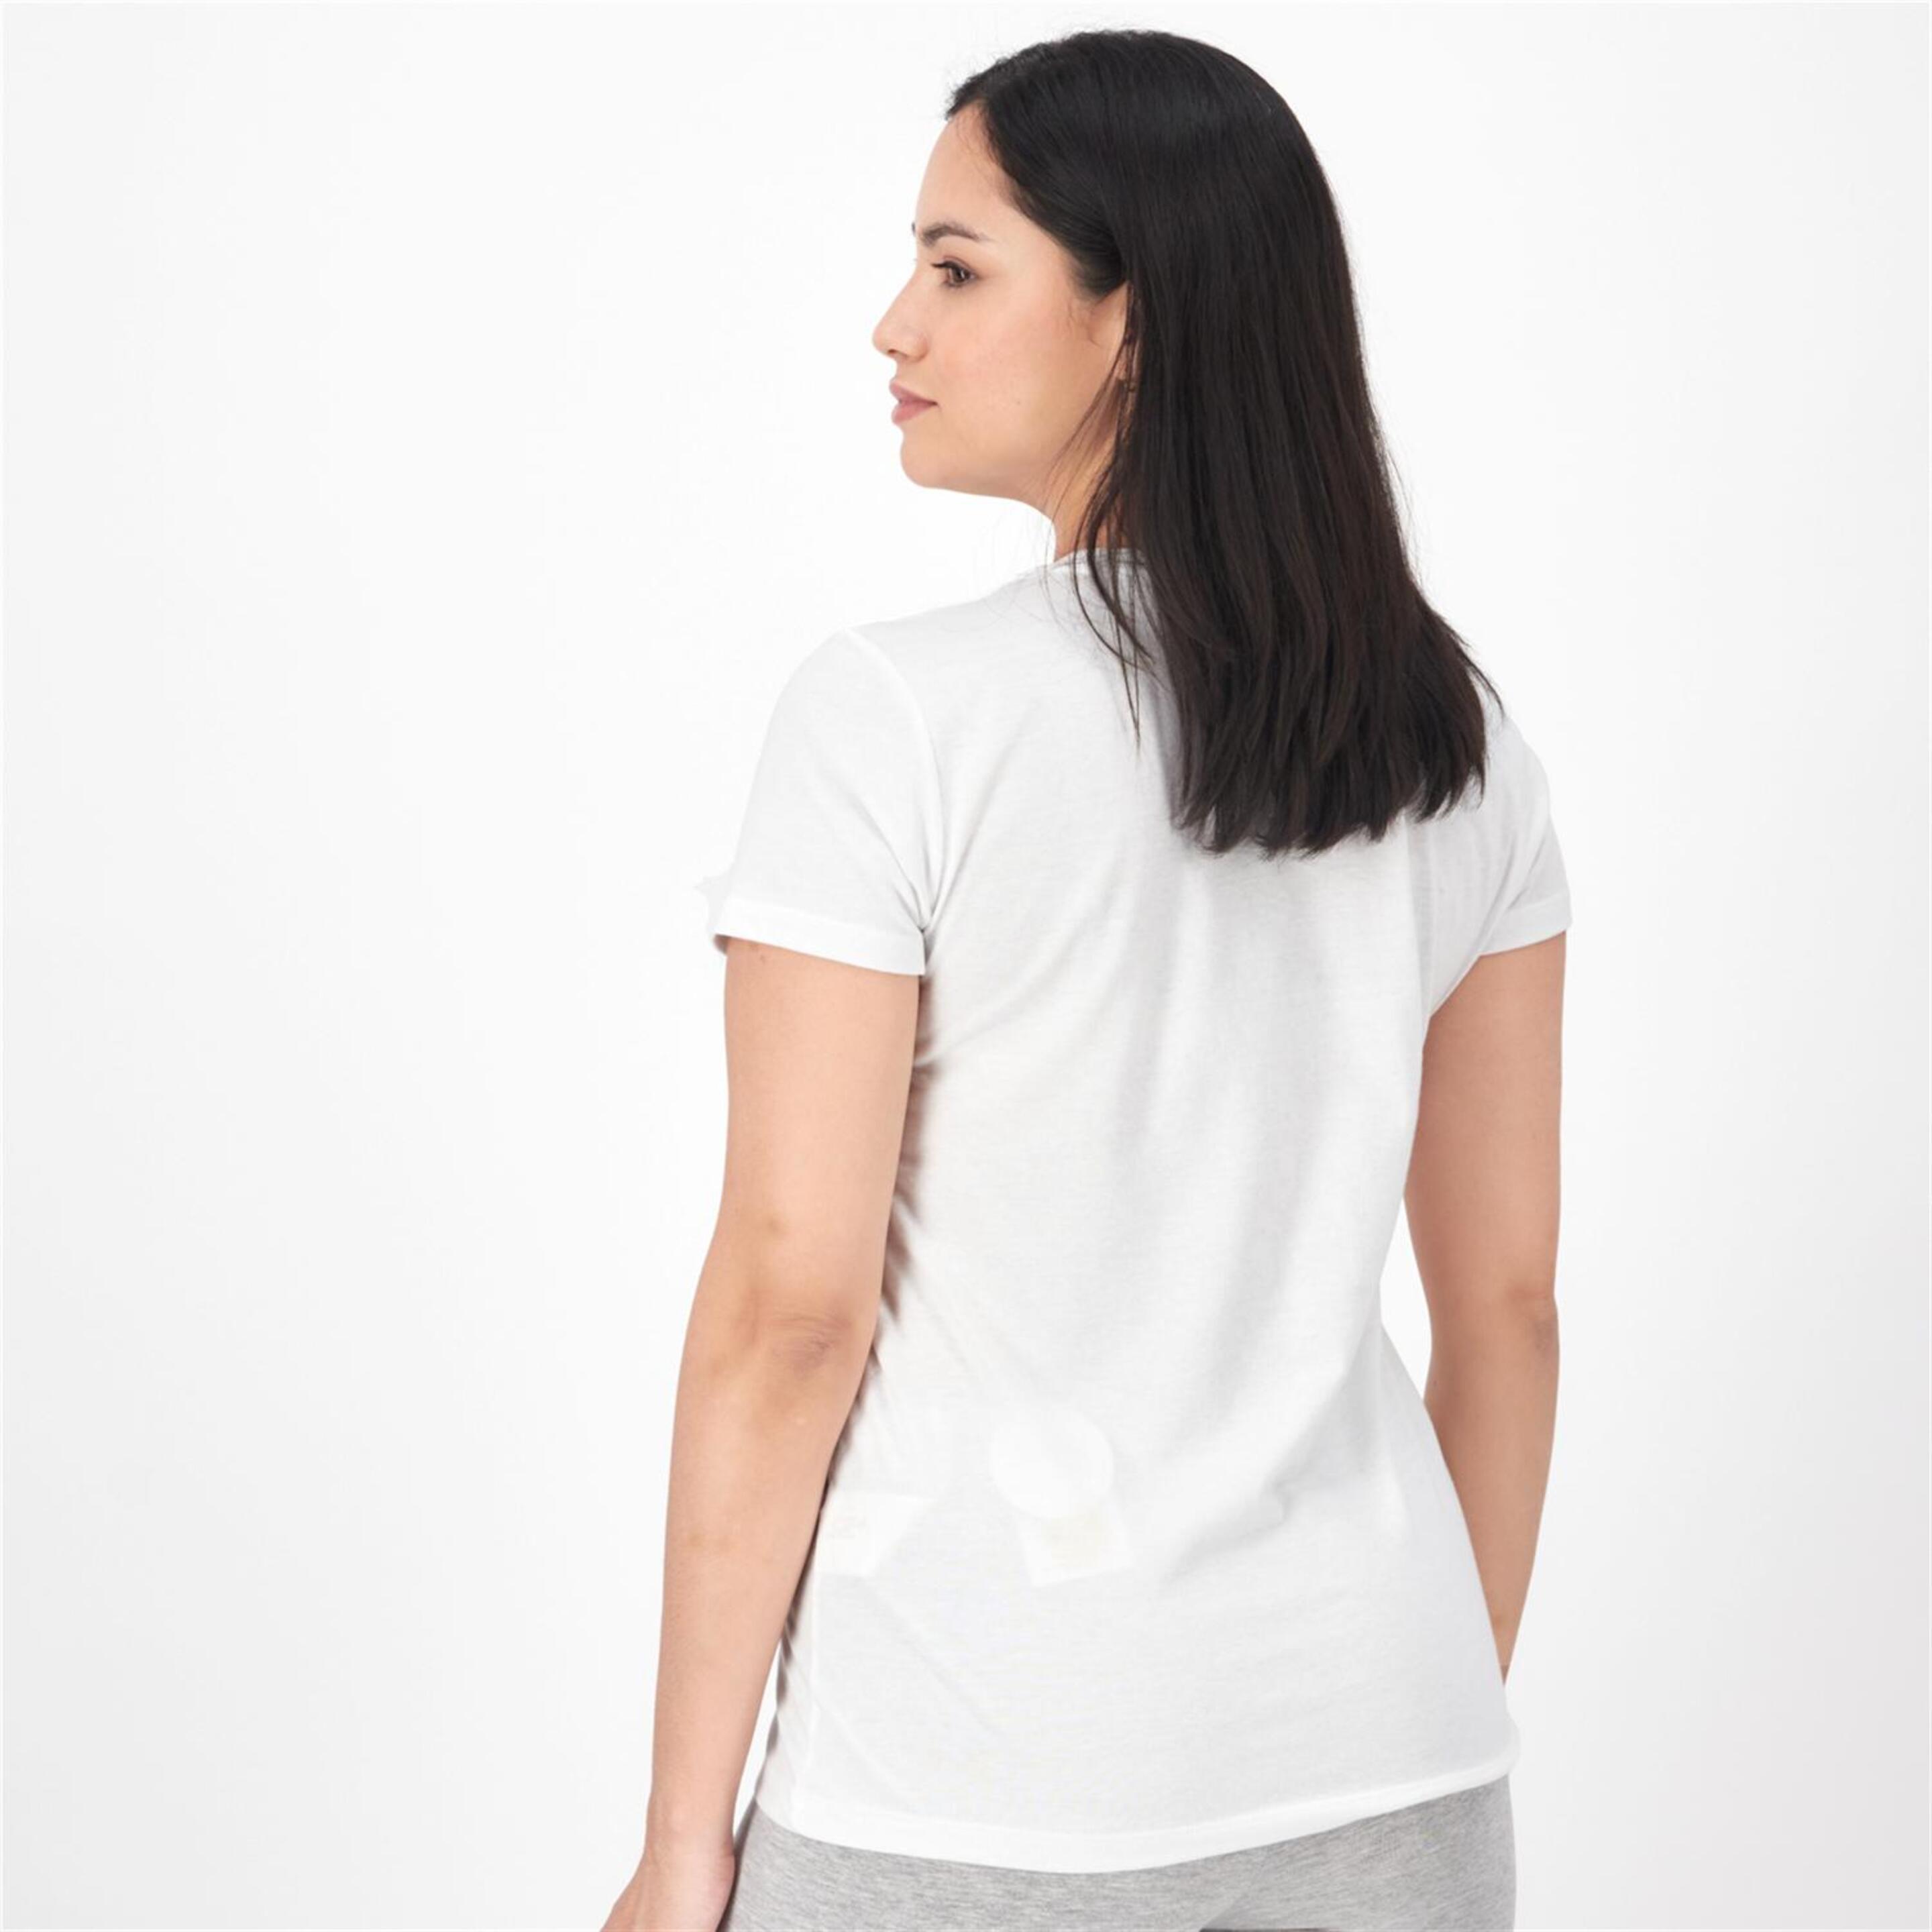 Camiseta Under Armour - Blanco - Camiseta Mujer